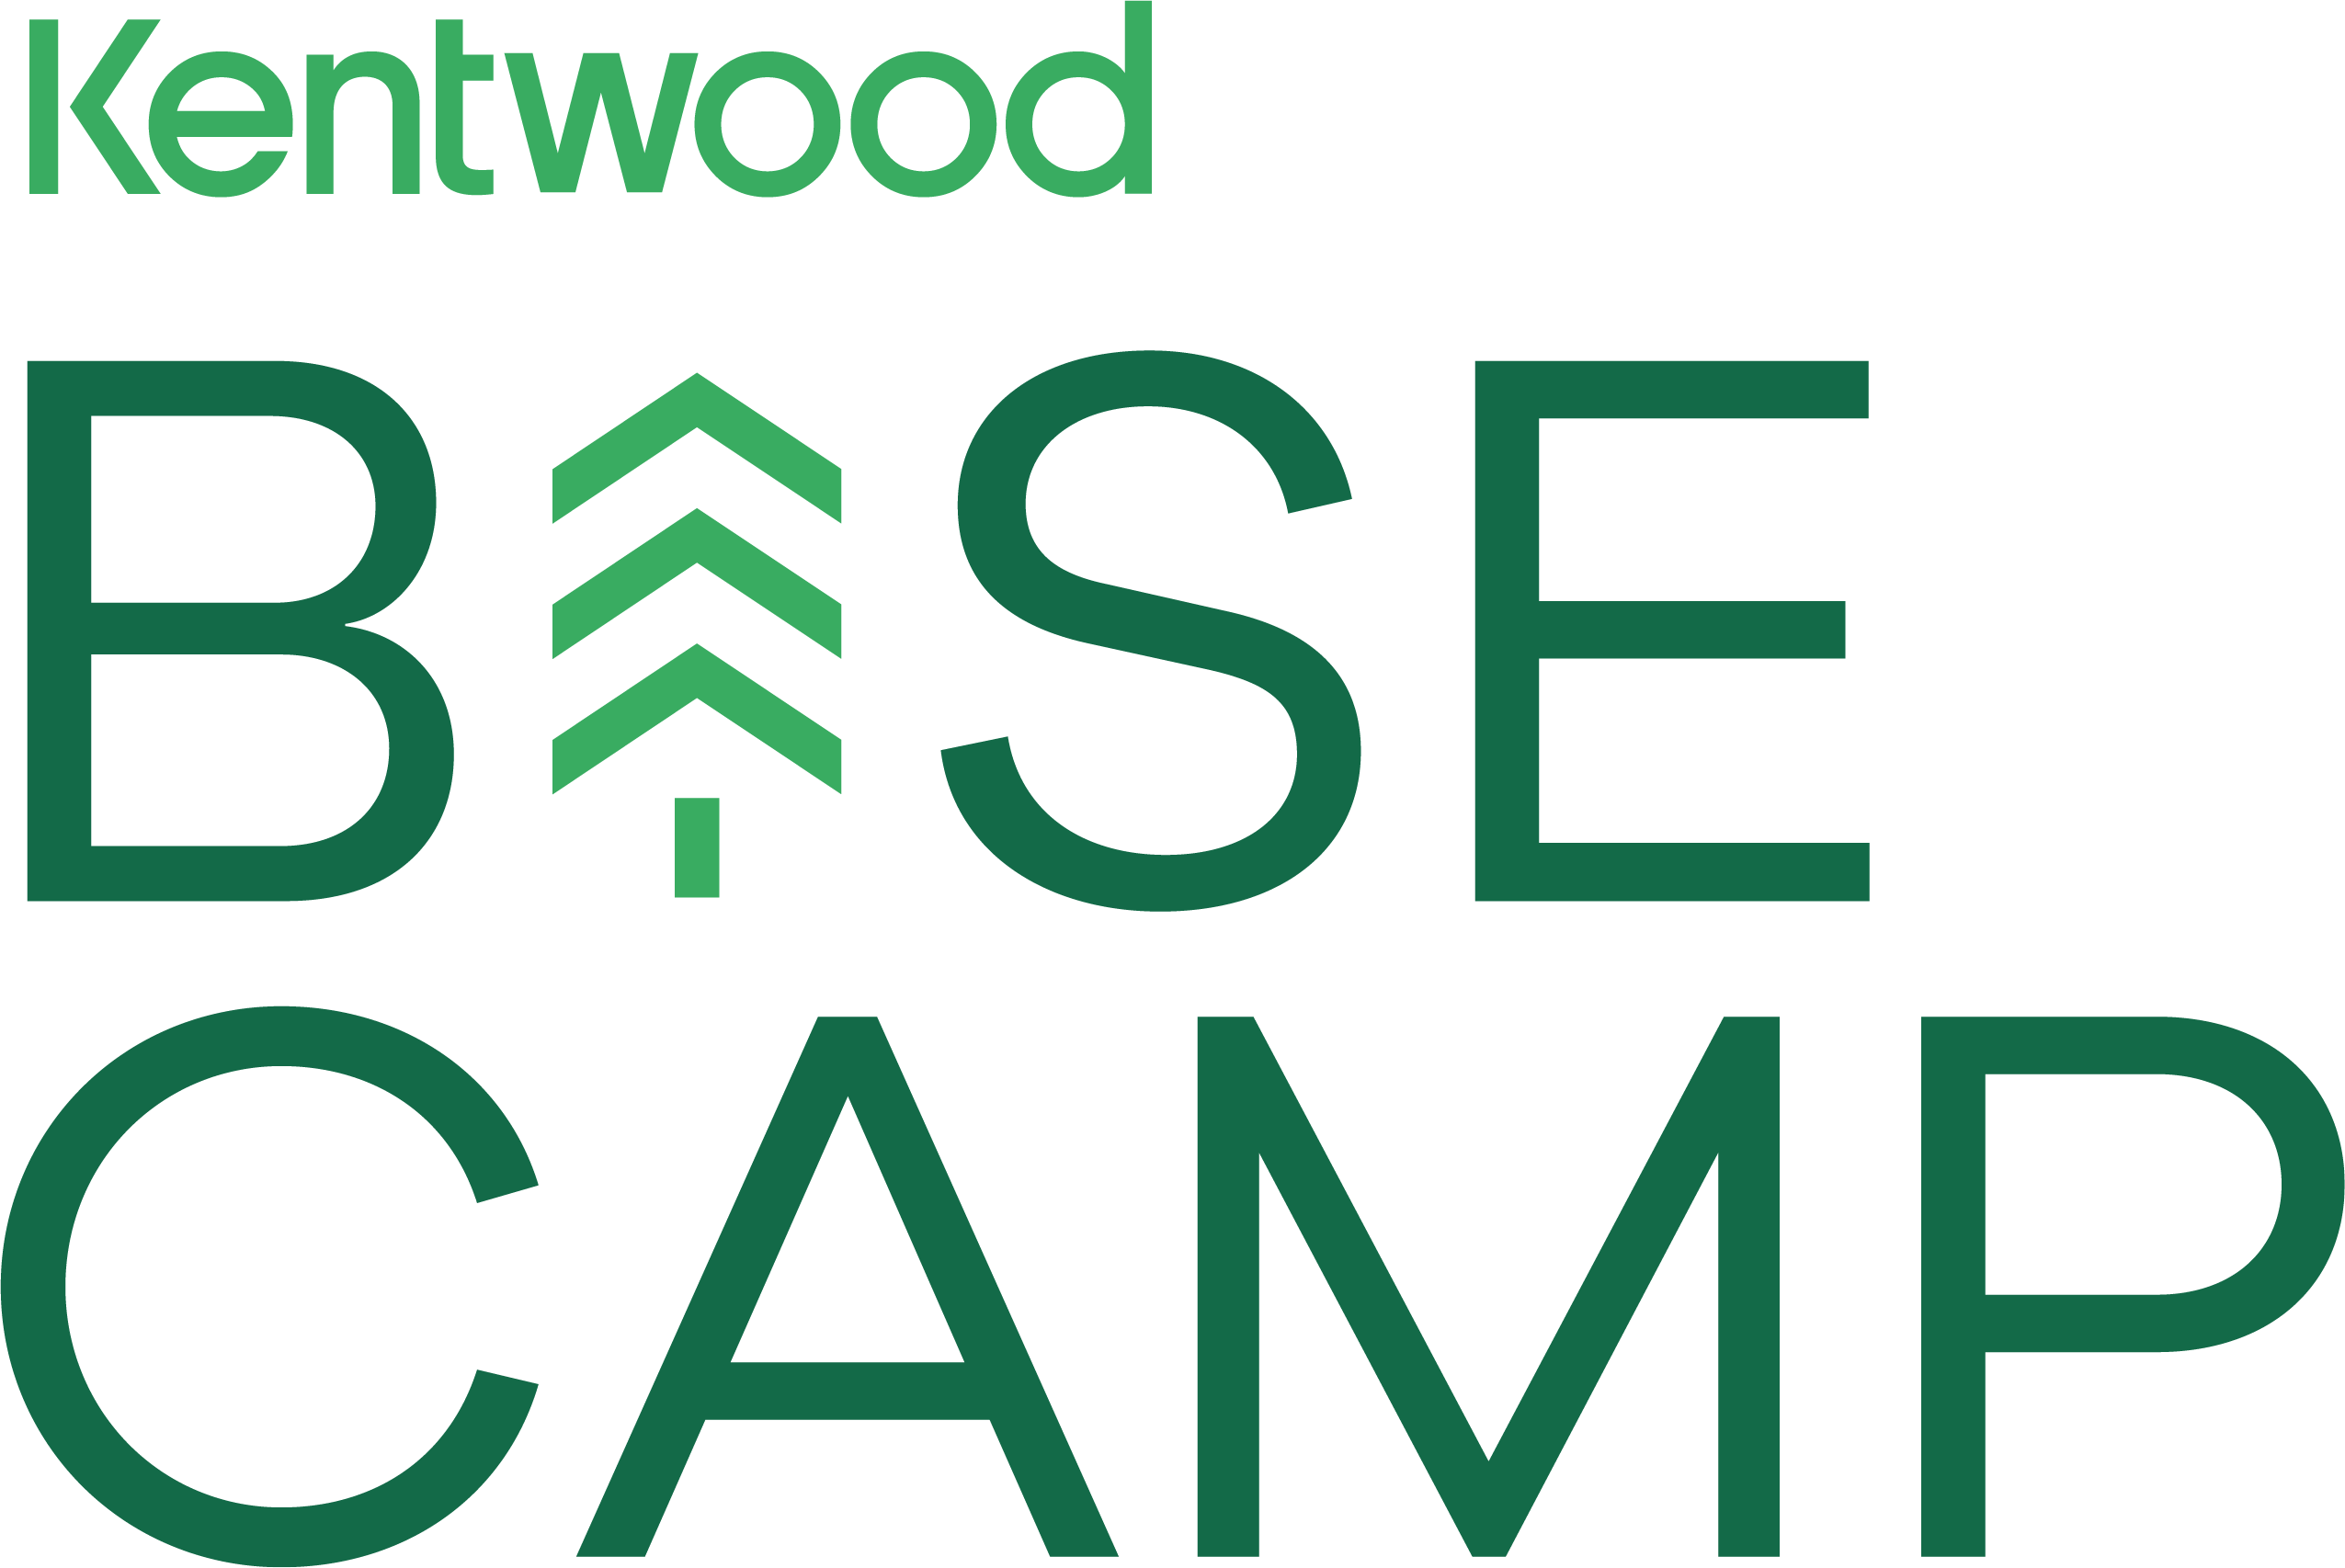 Kentwood Basecamp